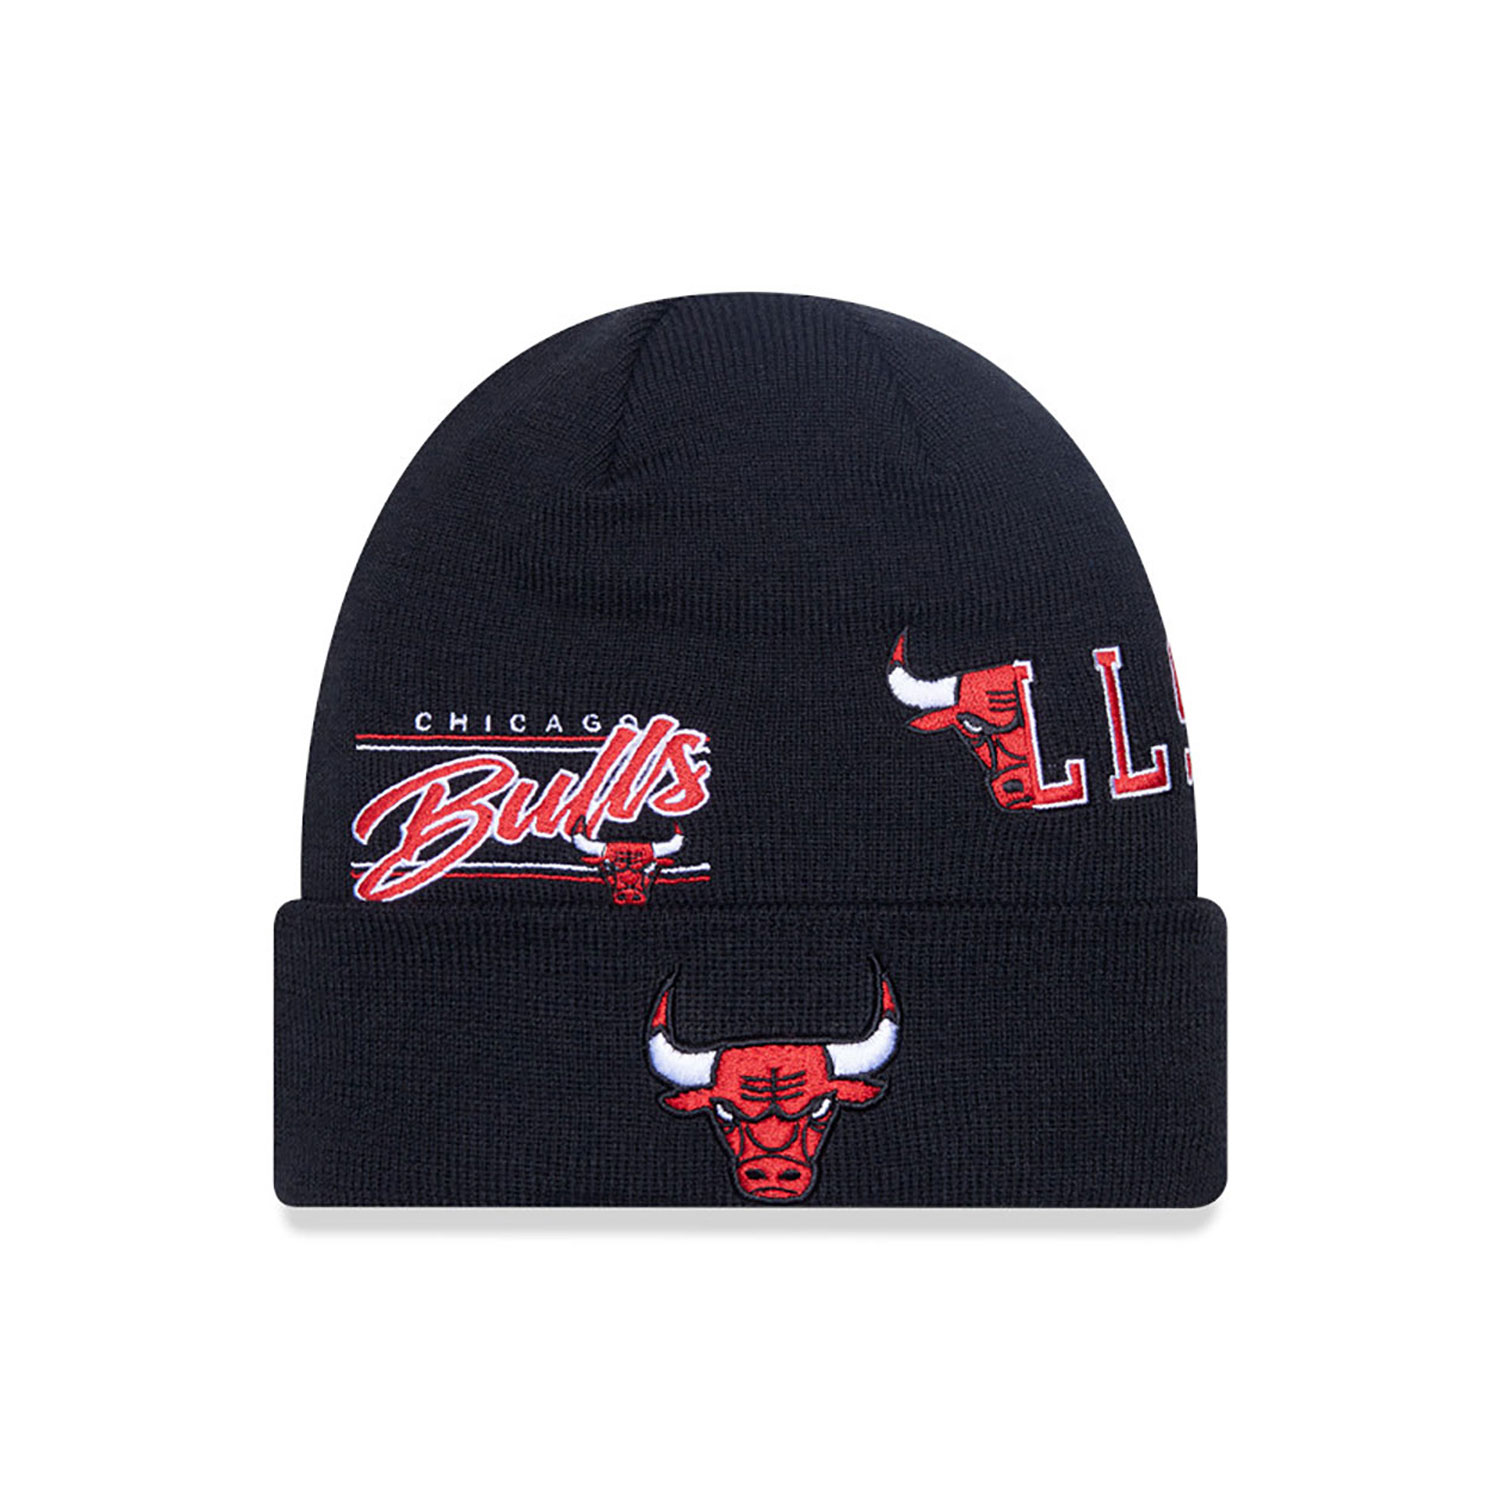 Chicago Bulls Multi Patch Black Cuff Knit Beanie Hat